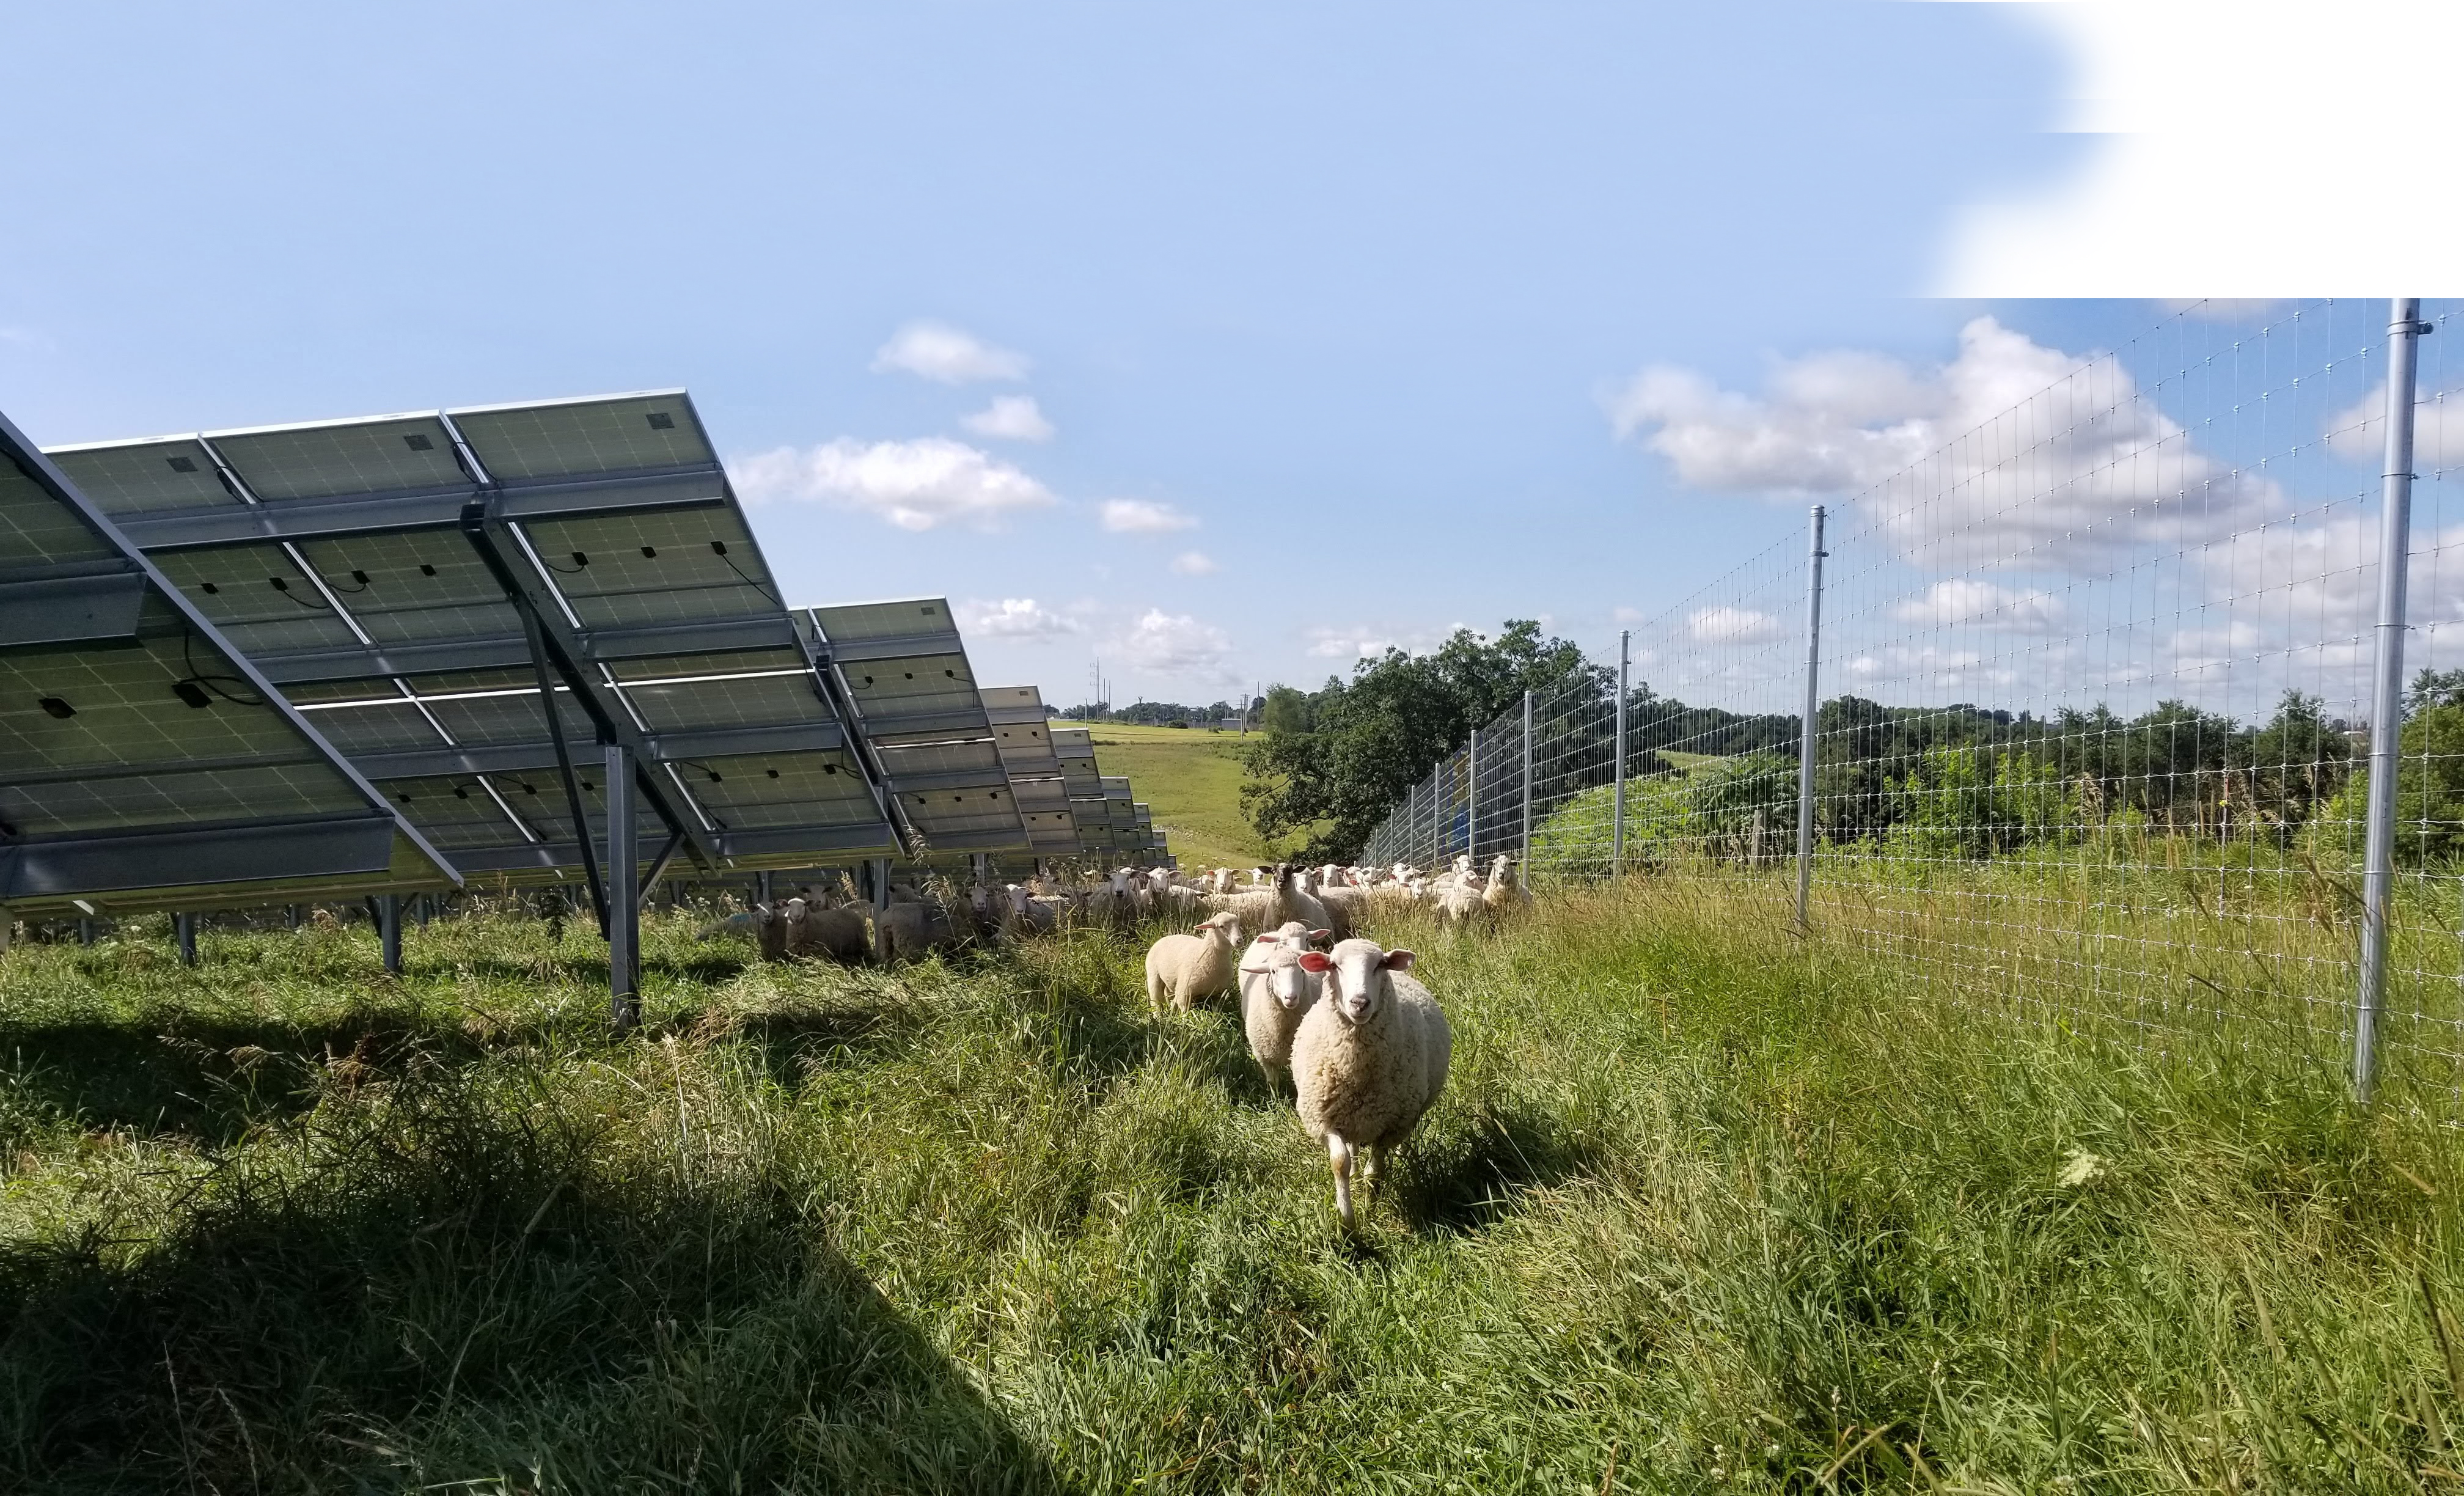 White sheep in single file walk past solar panels.